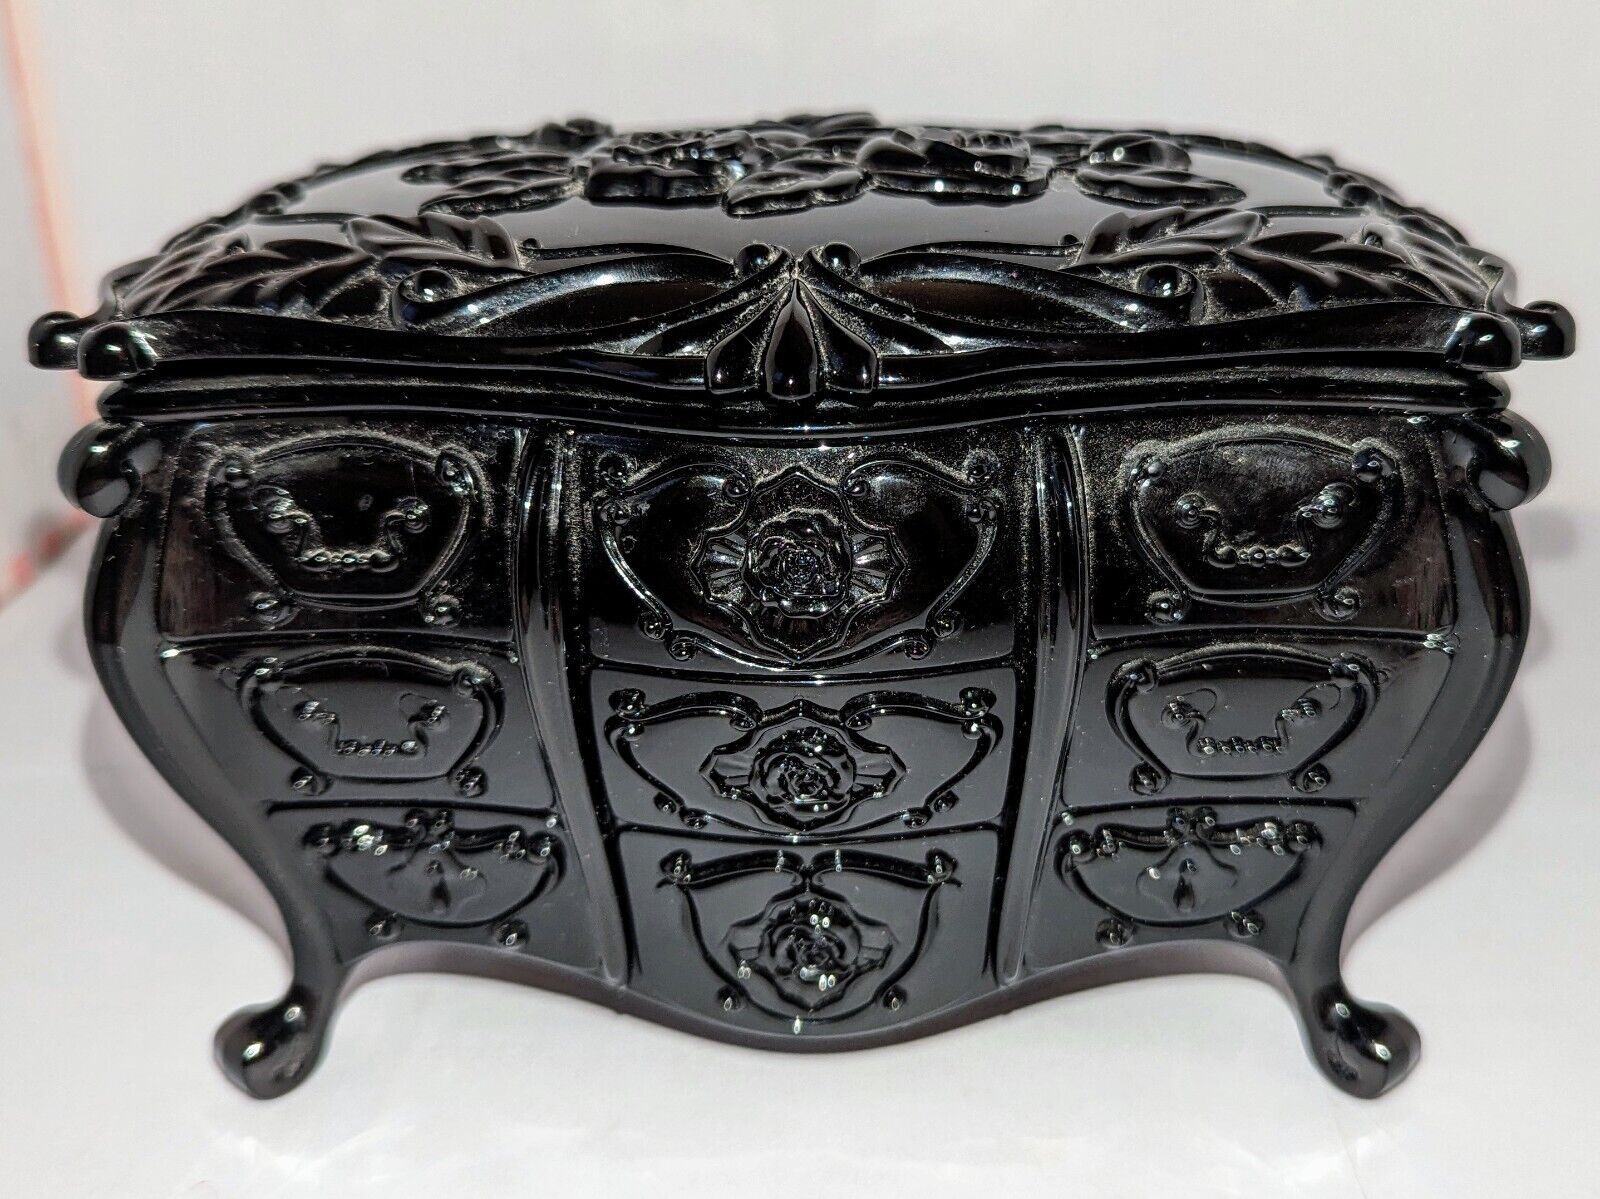 Anna Sui Gothic Black Vanity Box Jewelry Beauty Dresser Boudoir Rose Design A+